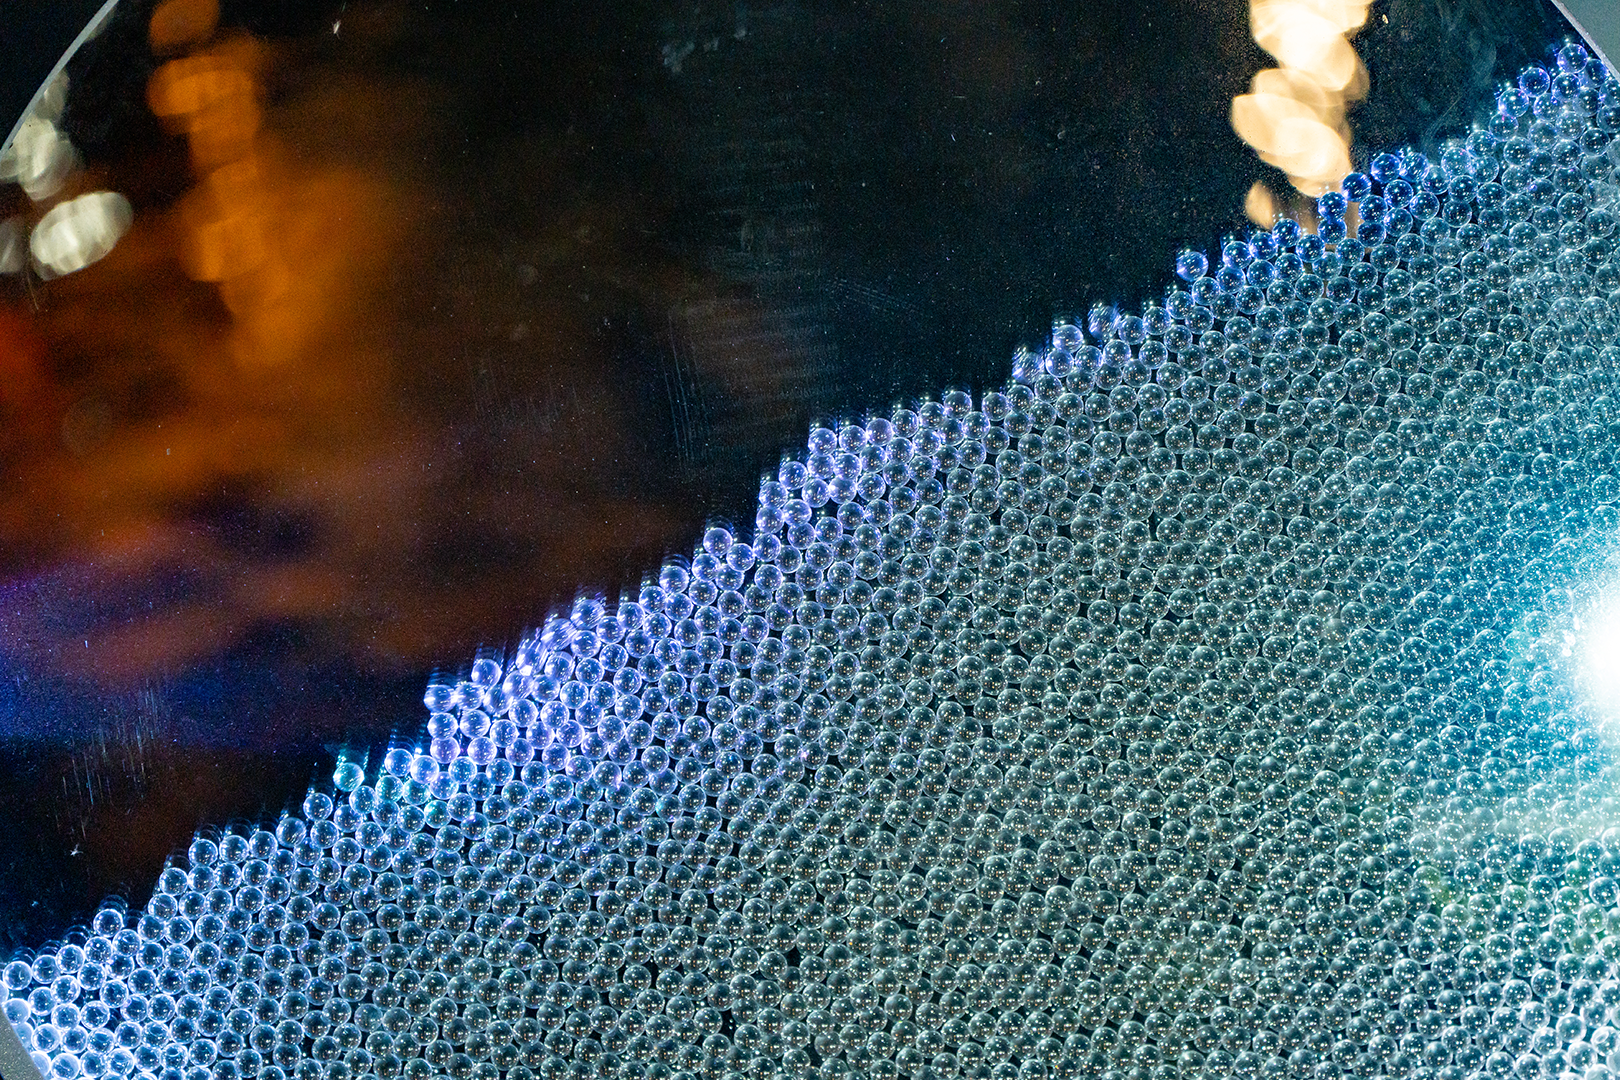 nightscape-radiation - close-up